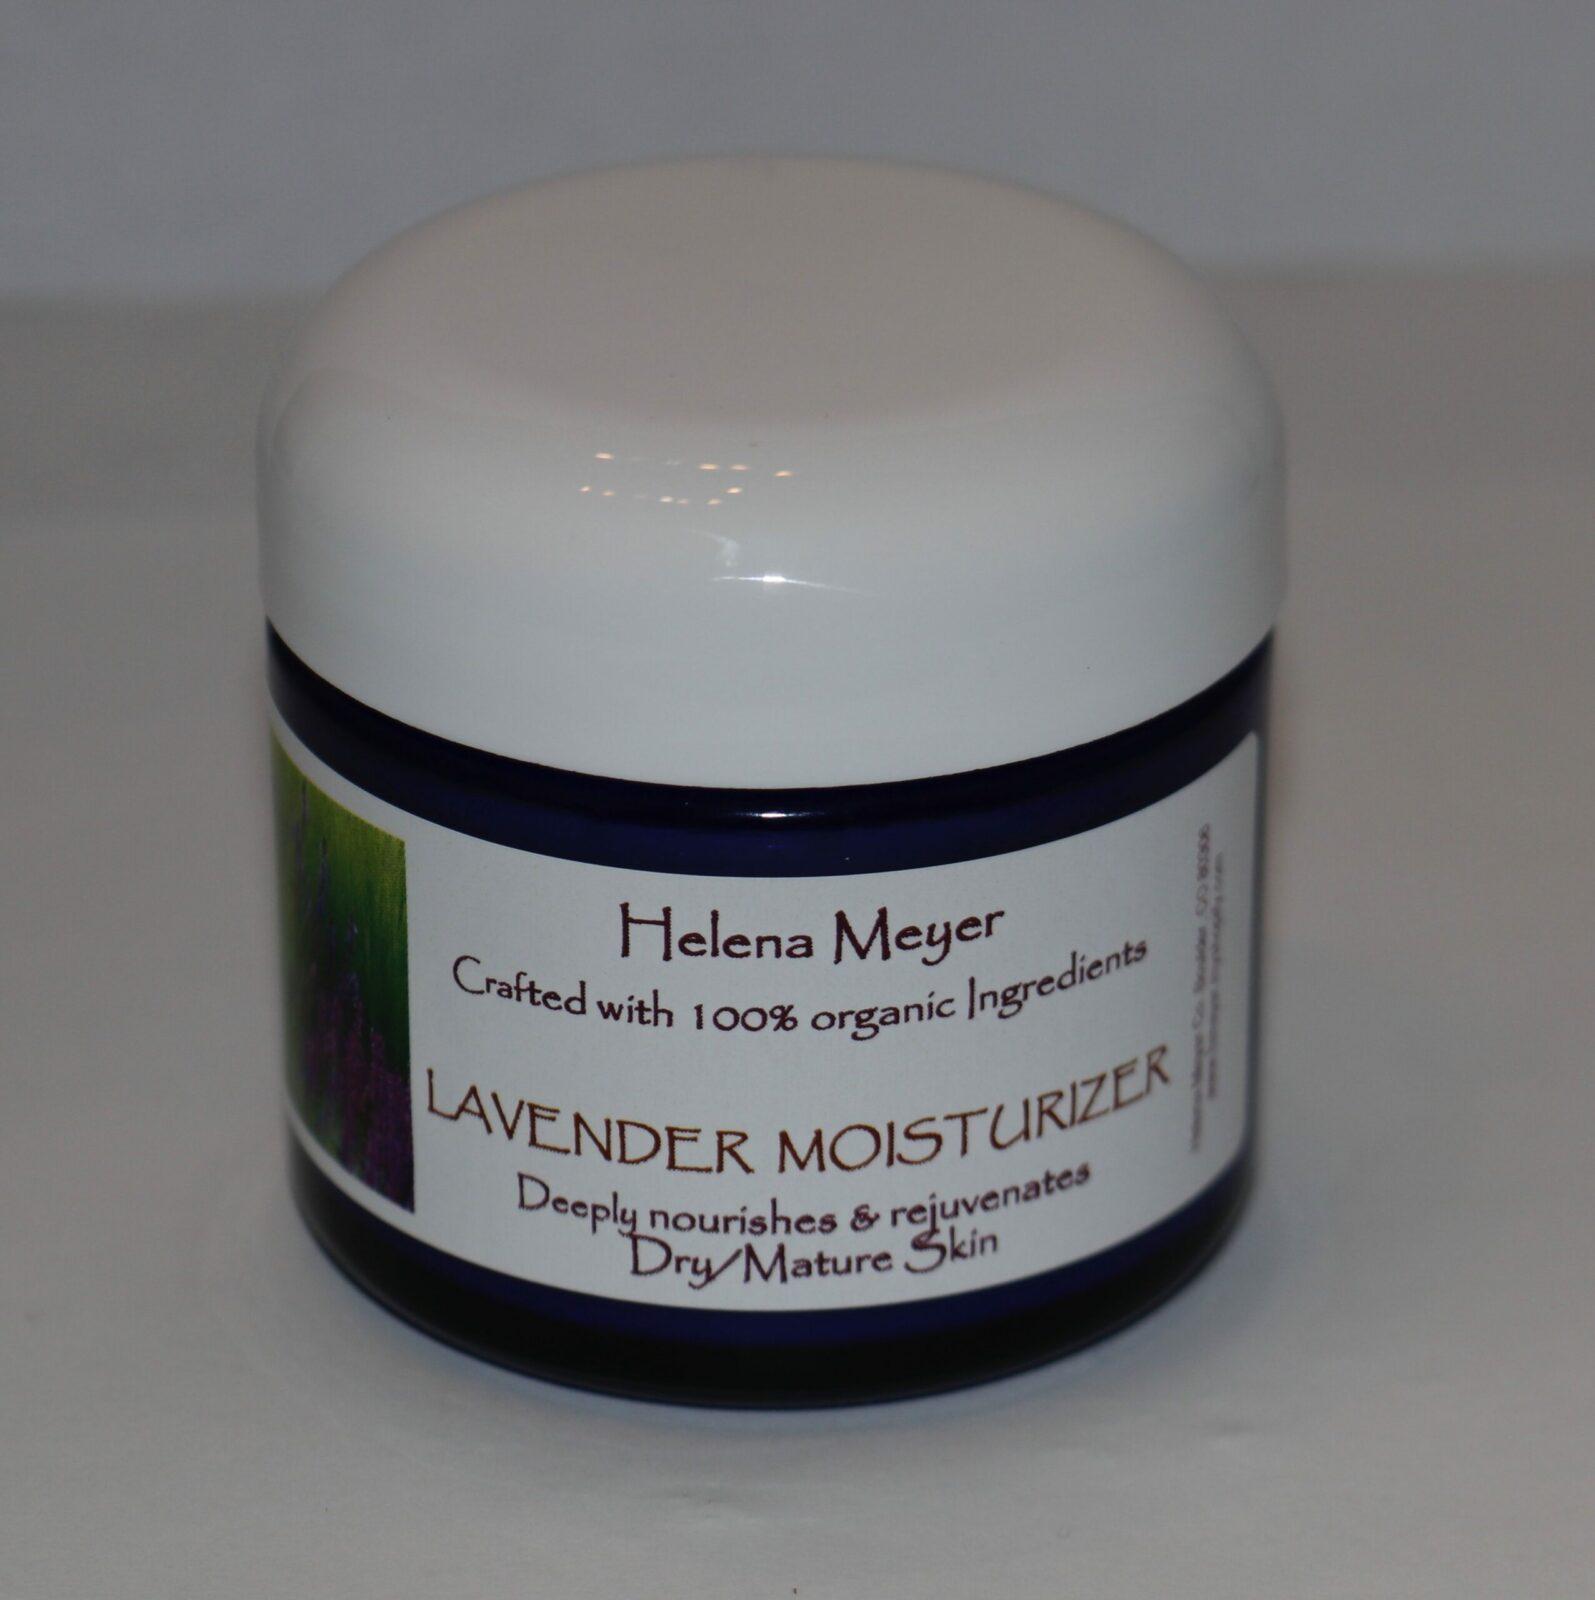 Lavender Moisturizer for Dry/Mature Skin 2 oz